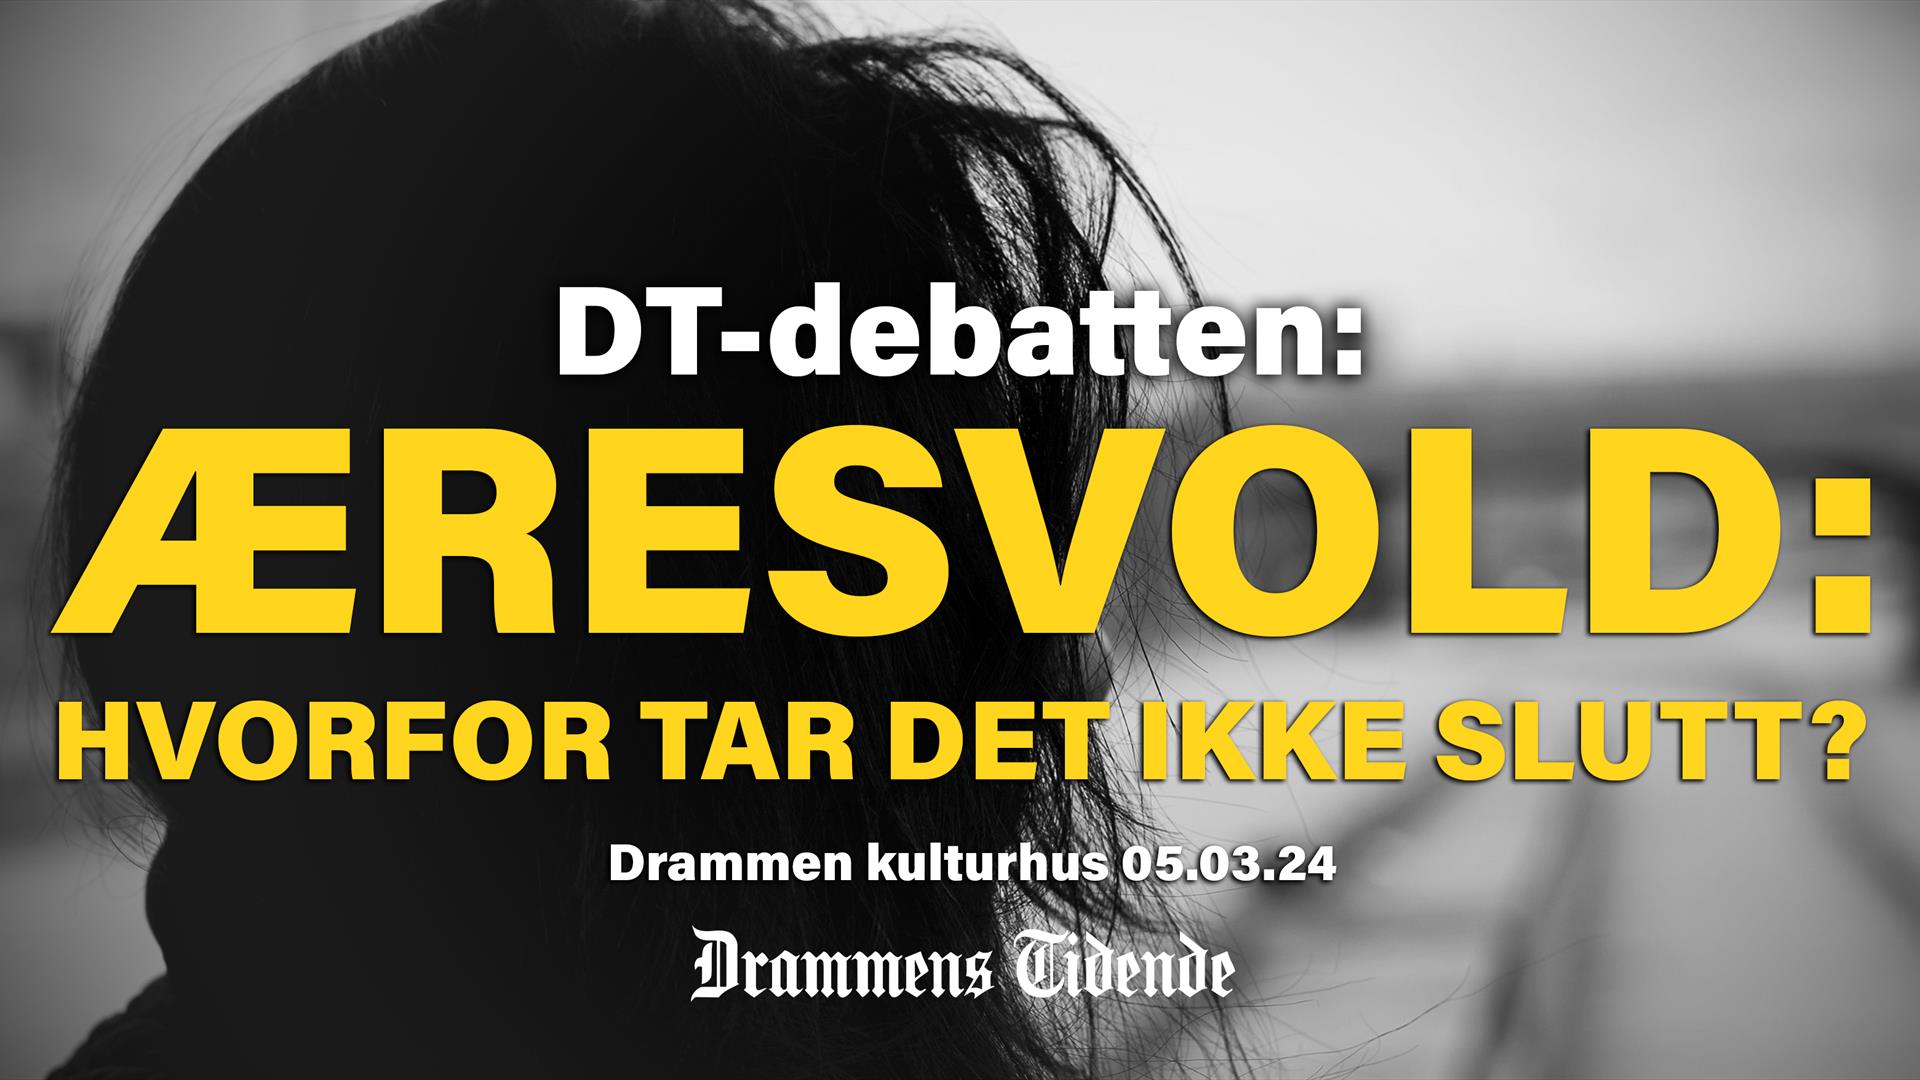 DT-debatten arrangeres av Drammens Tidende i samarbeid med Drammen Kulturhus